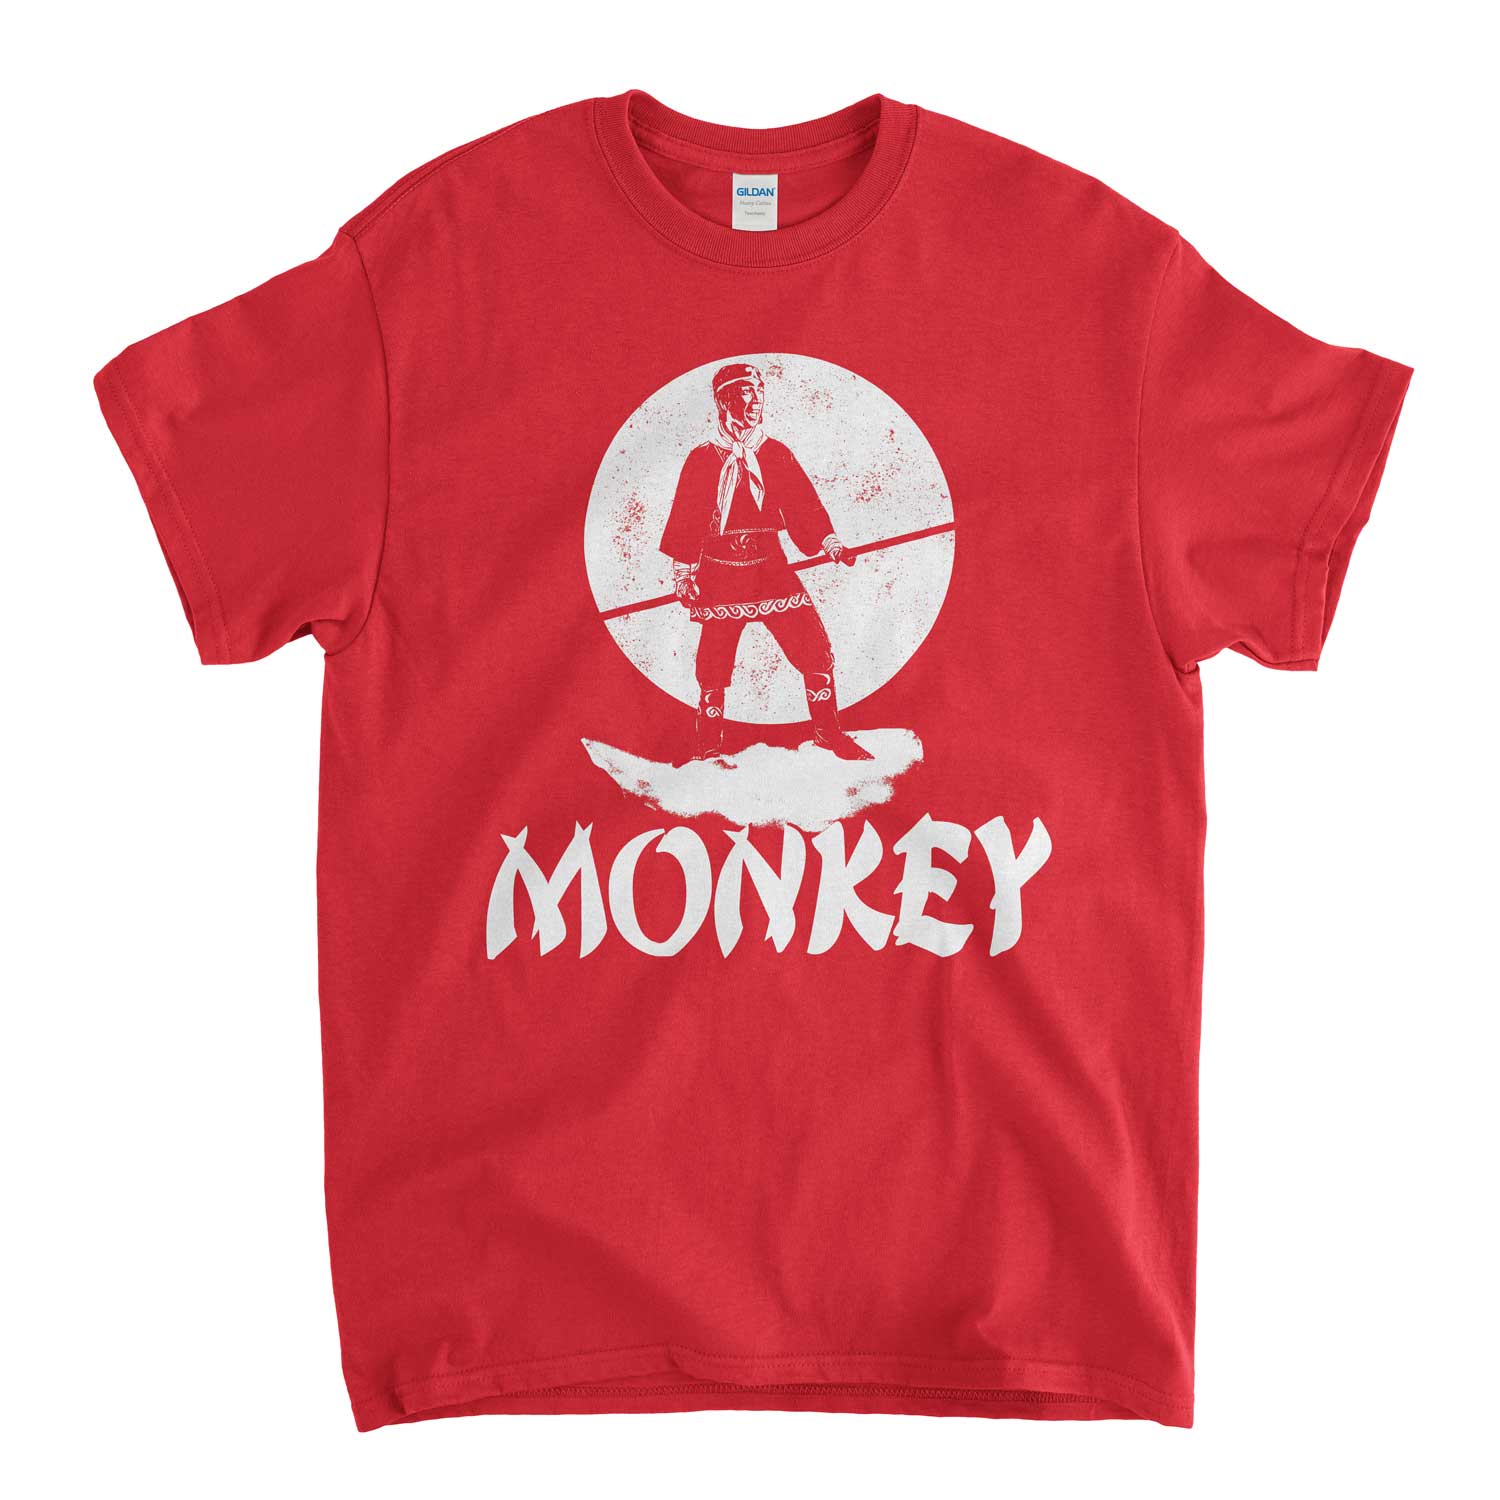 Monkey T Shirt - Cult Japanese TV Show Tribute Old Skool Hooligans